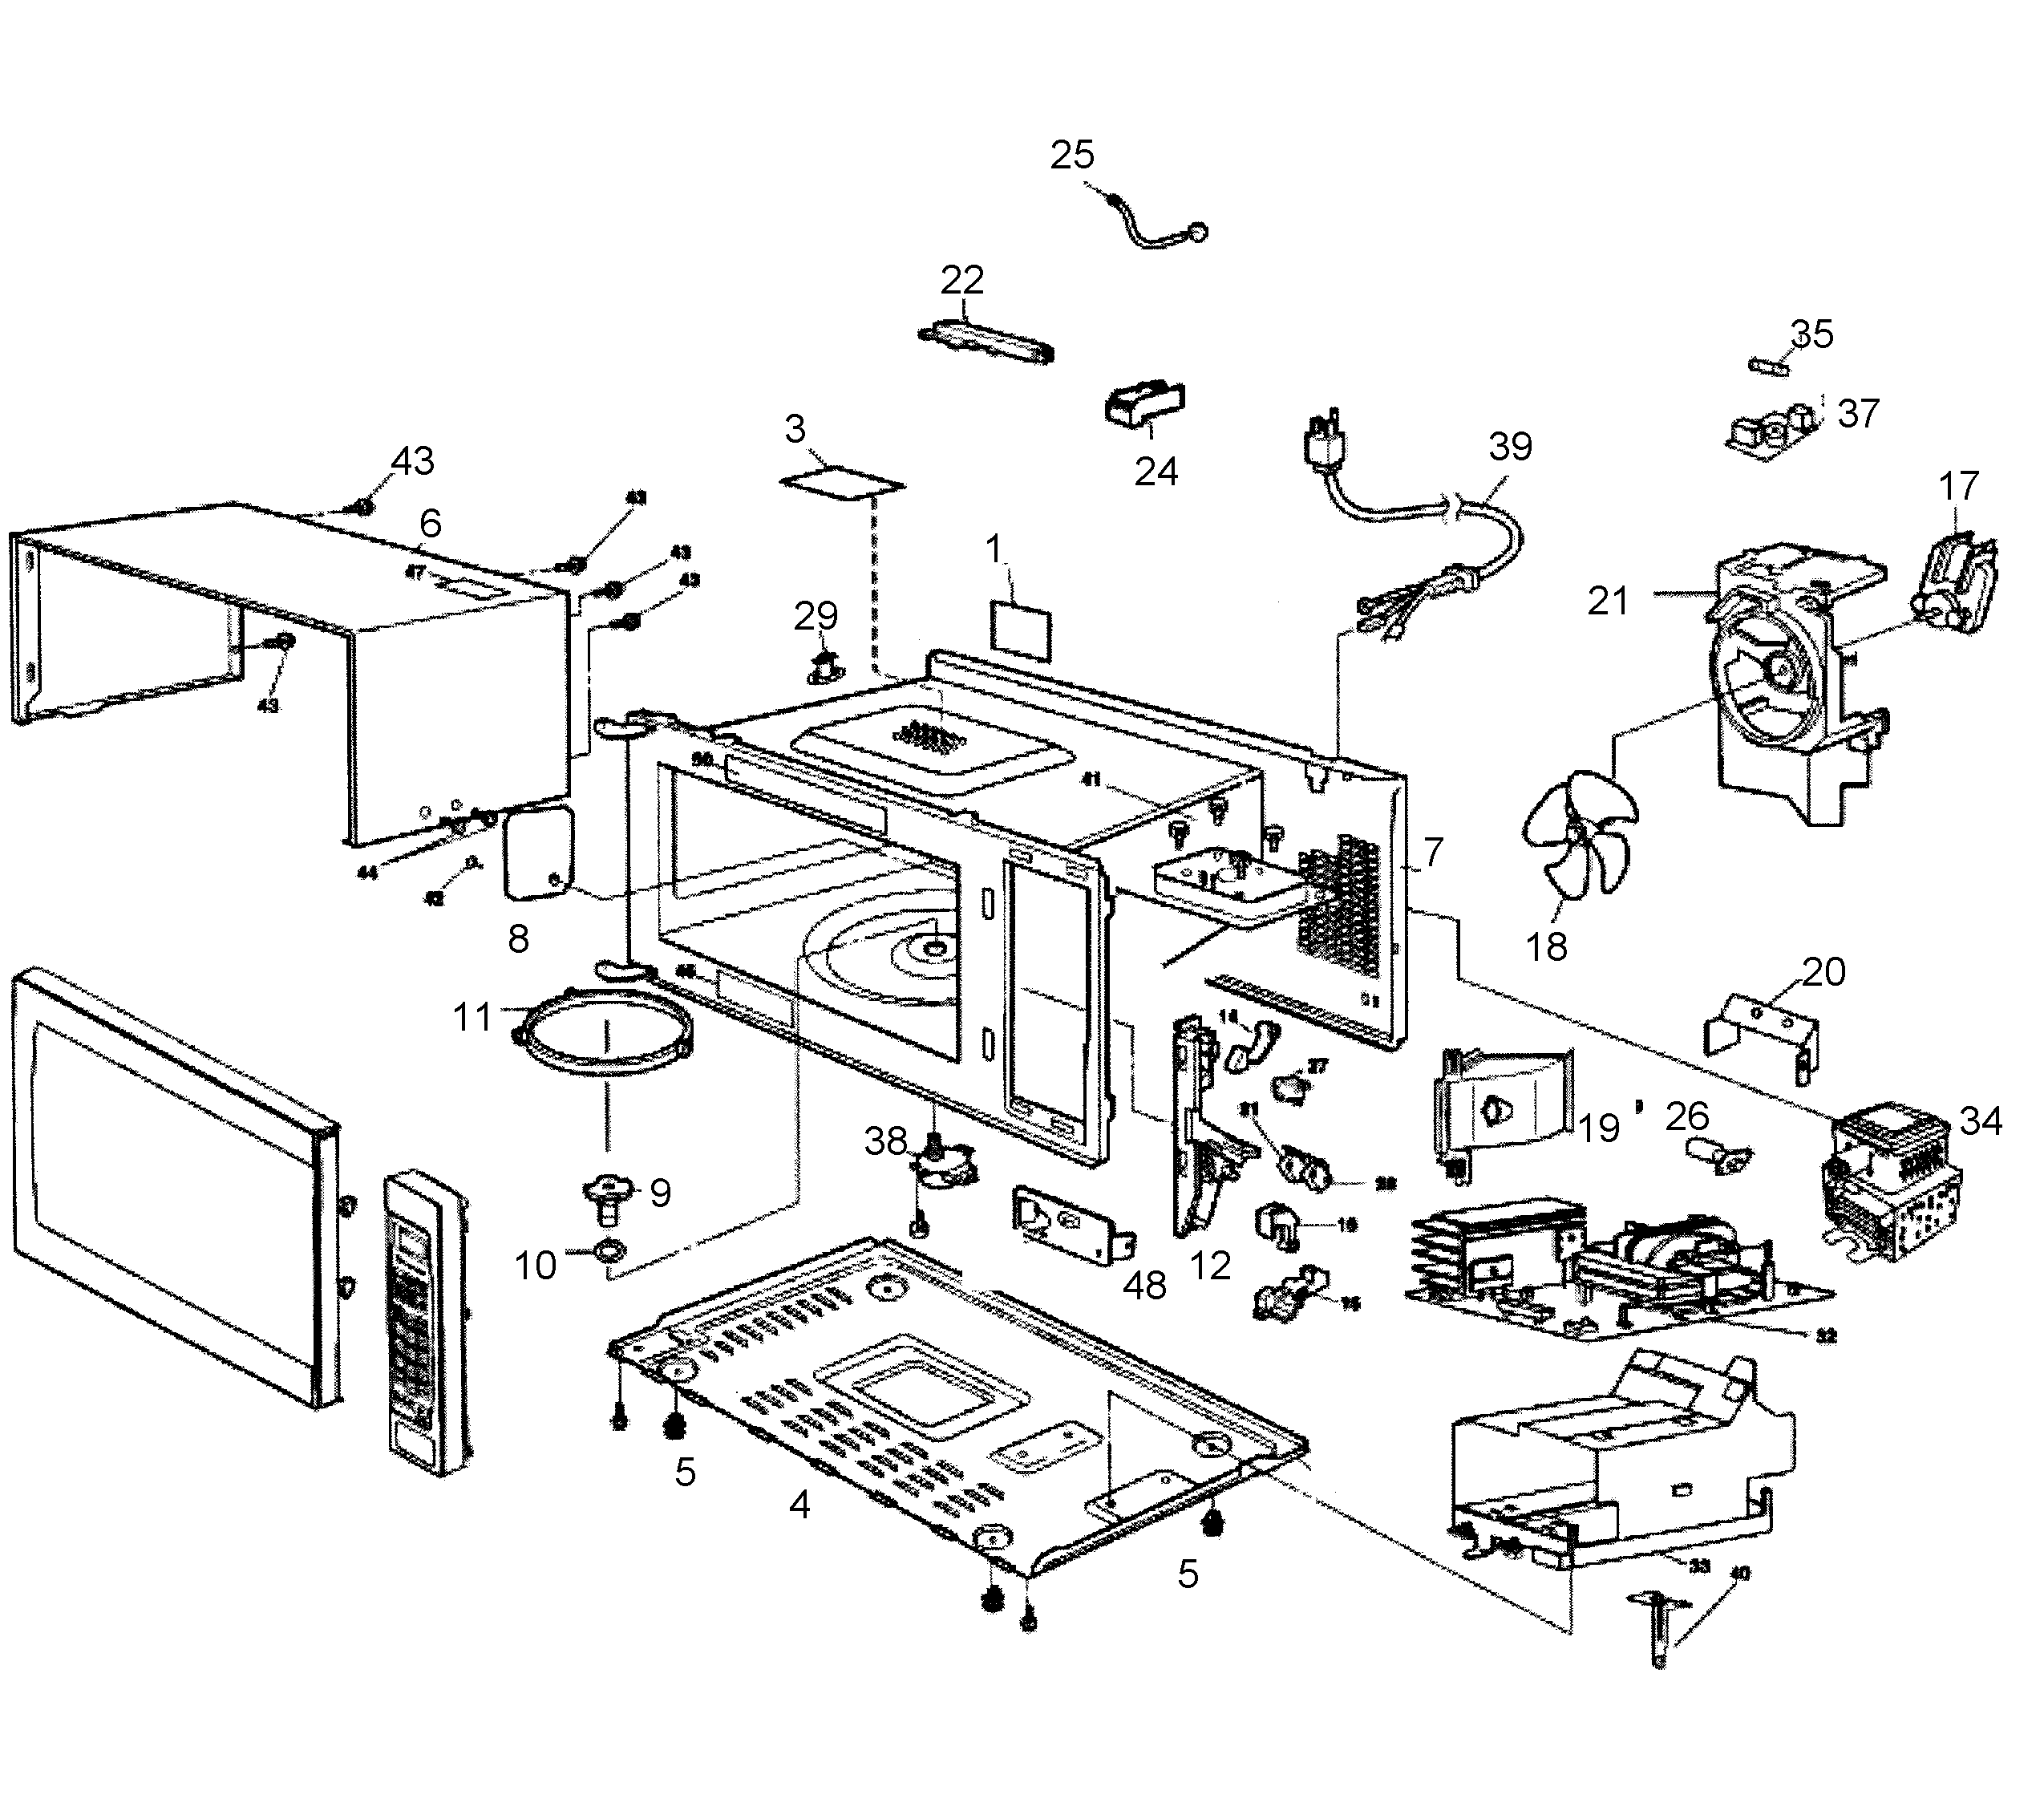 34 Microwave Parts Diagram - Free Wiring Diagram Source